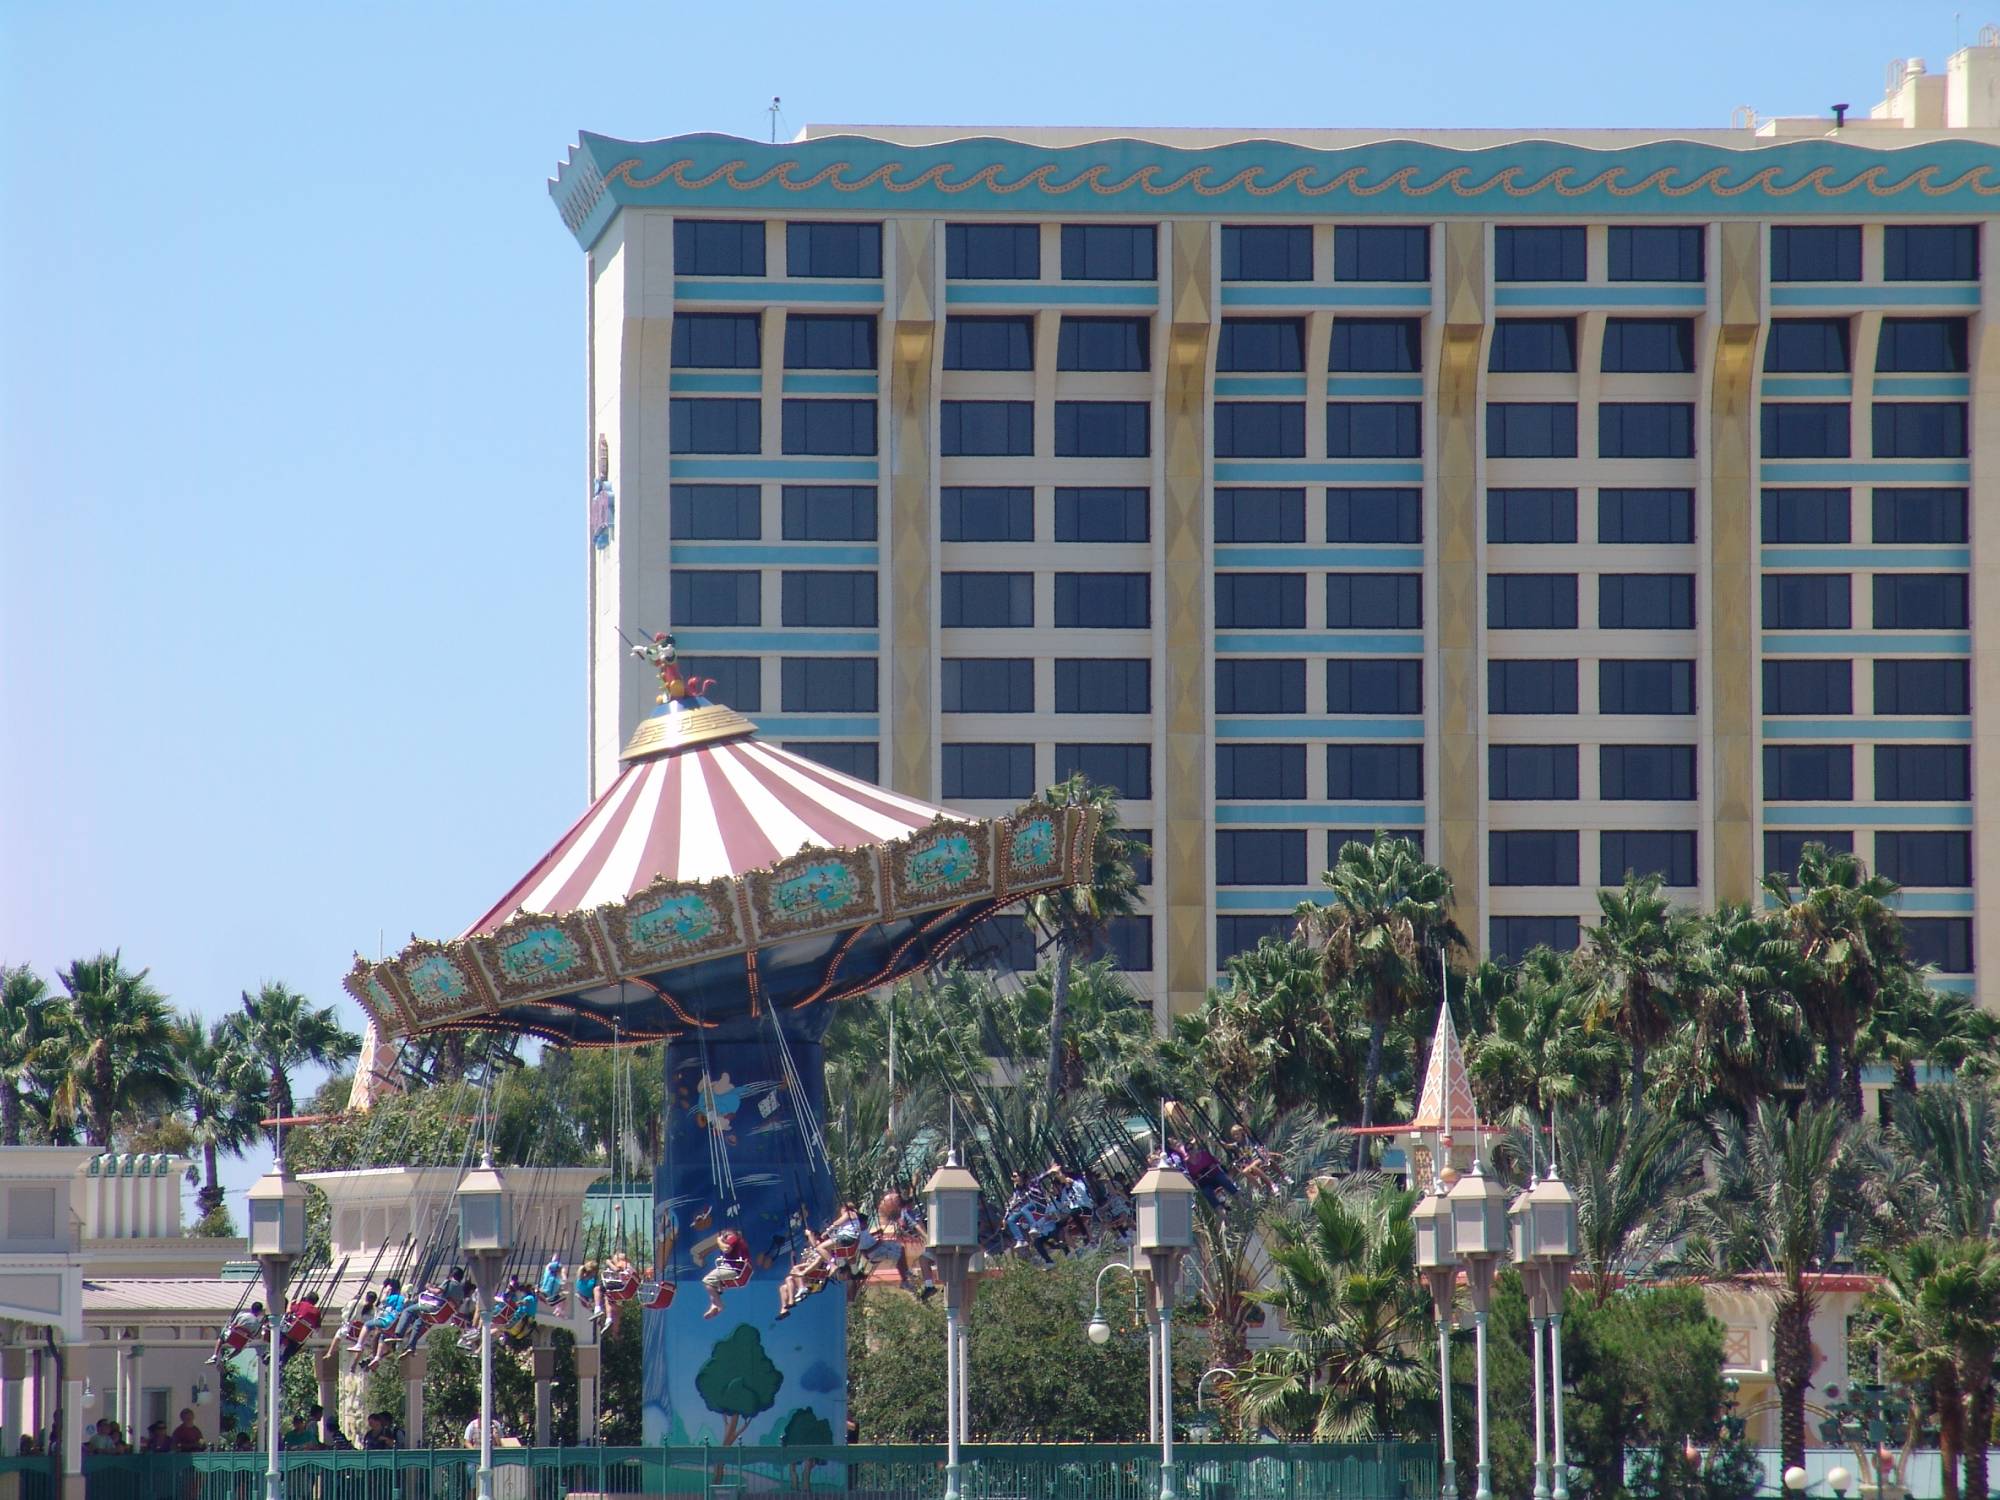 Disneyland - Paradise Pier Hotel